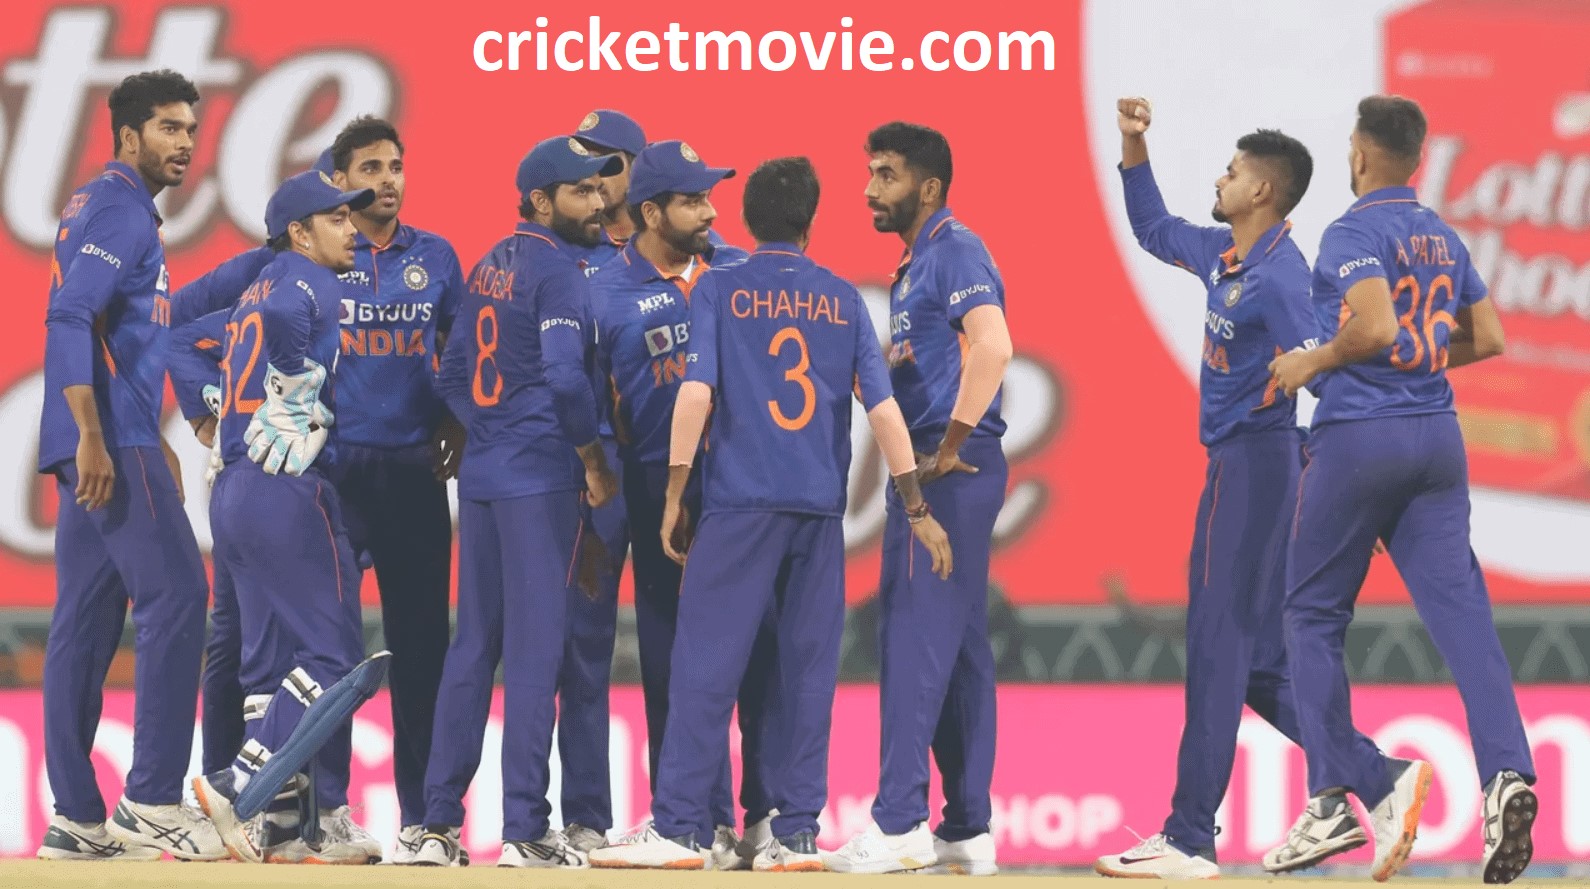 Team India Won 2nd T20 by 7 wickets-cricketmovie.com